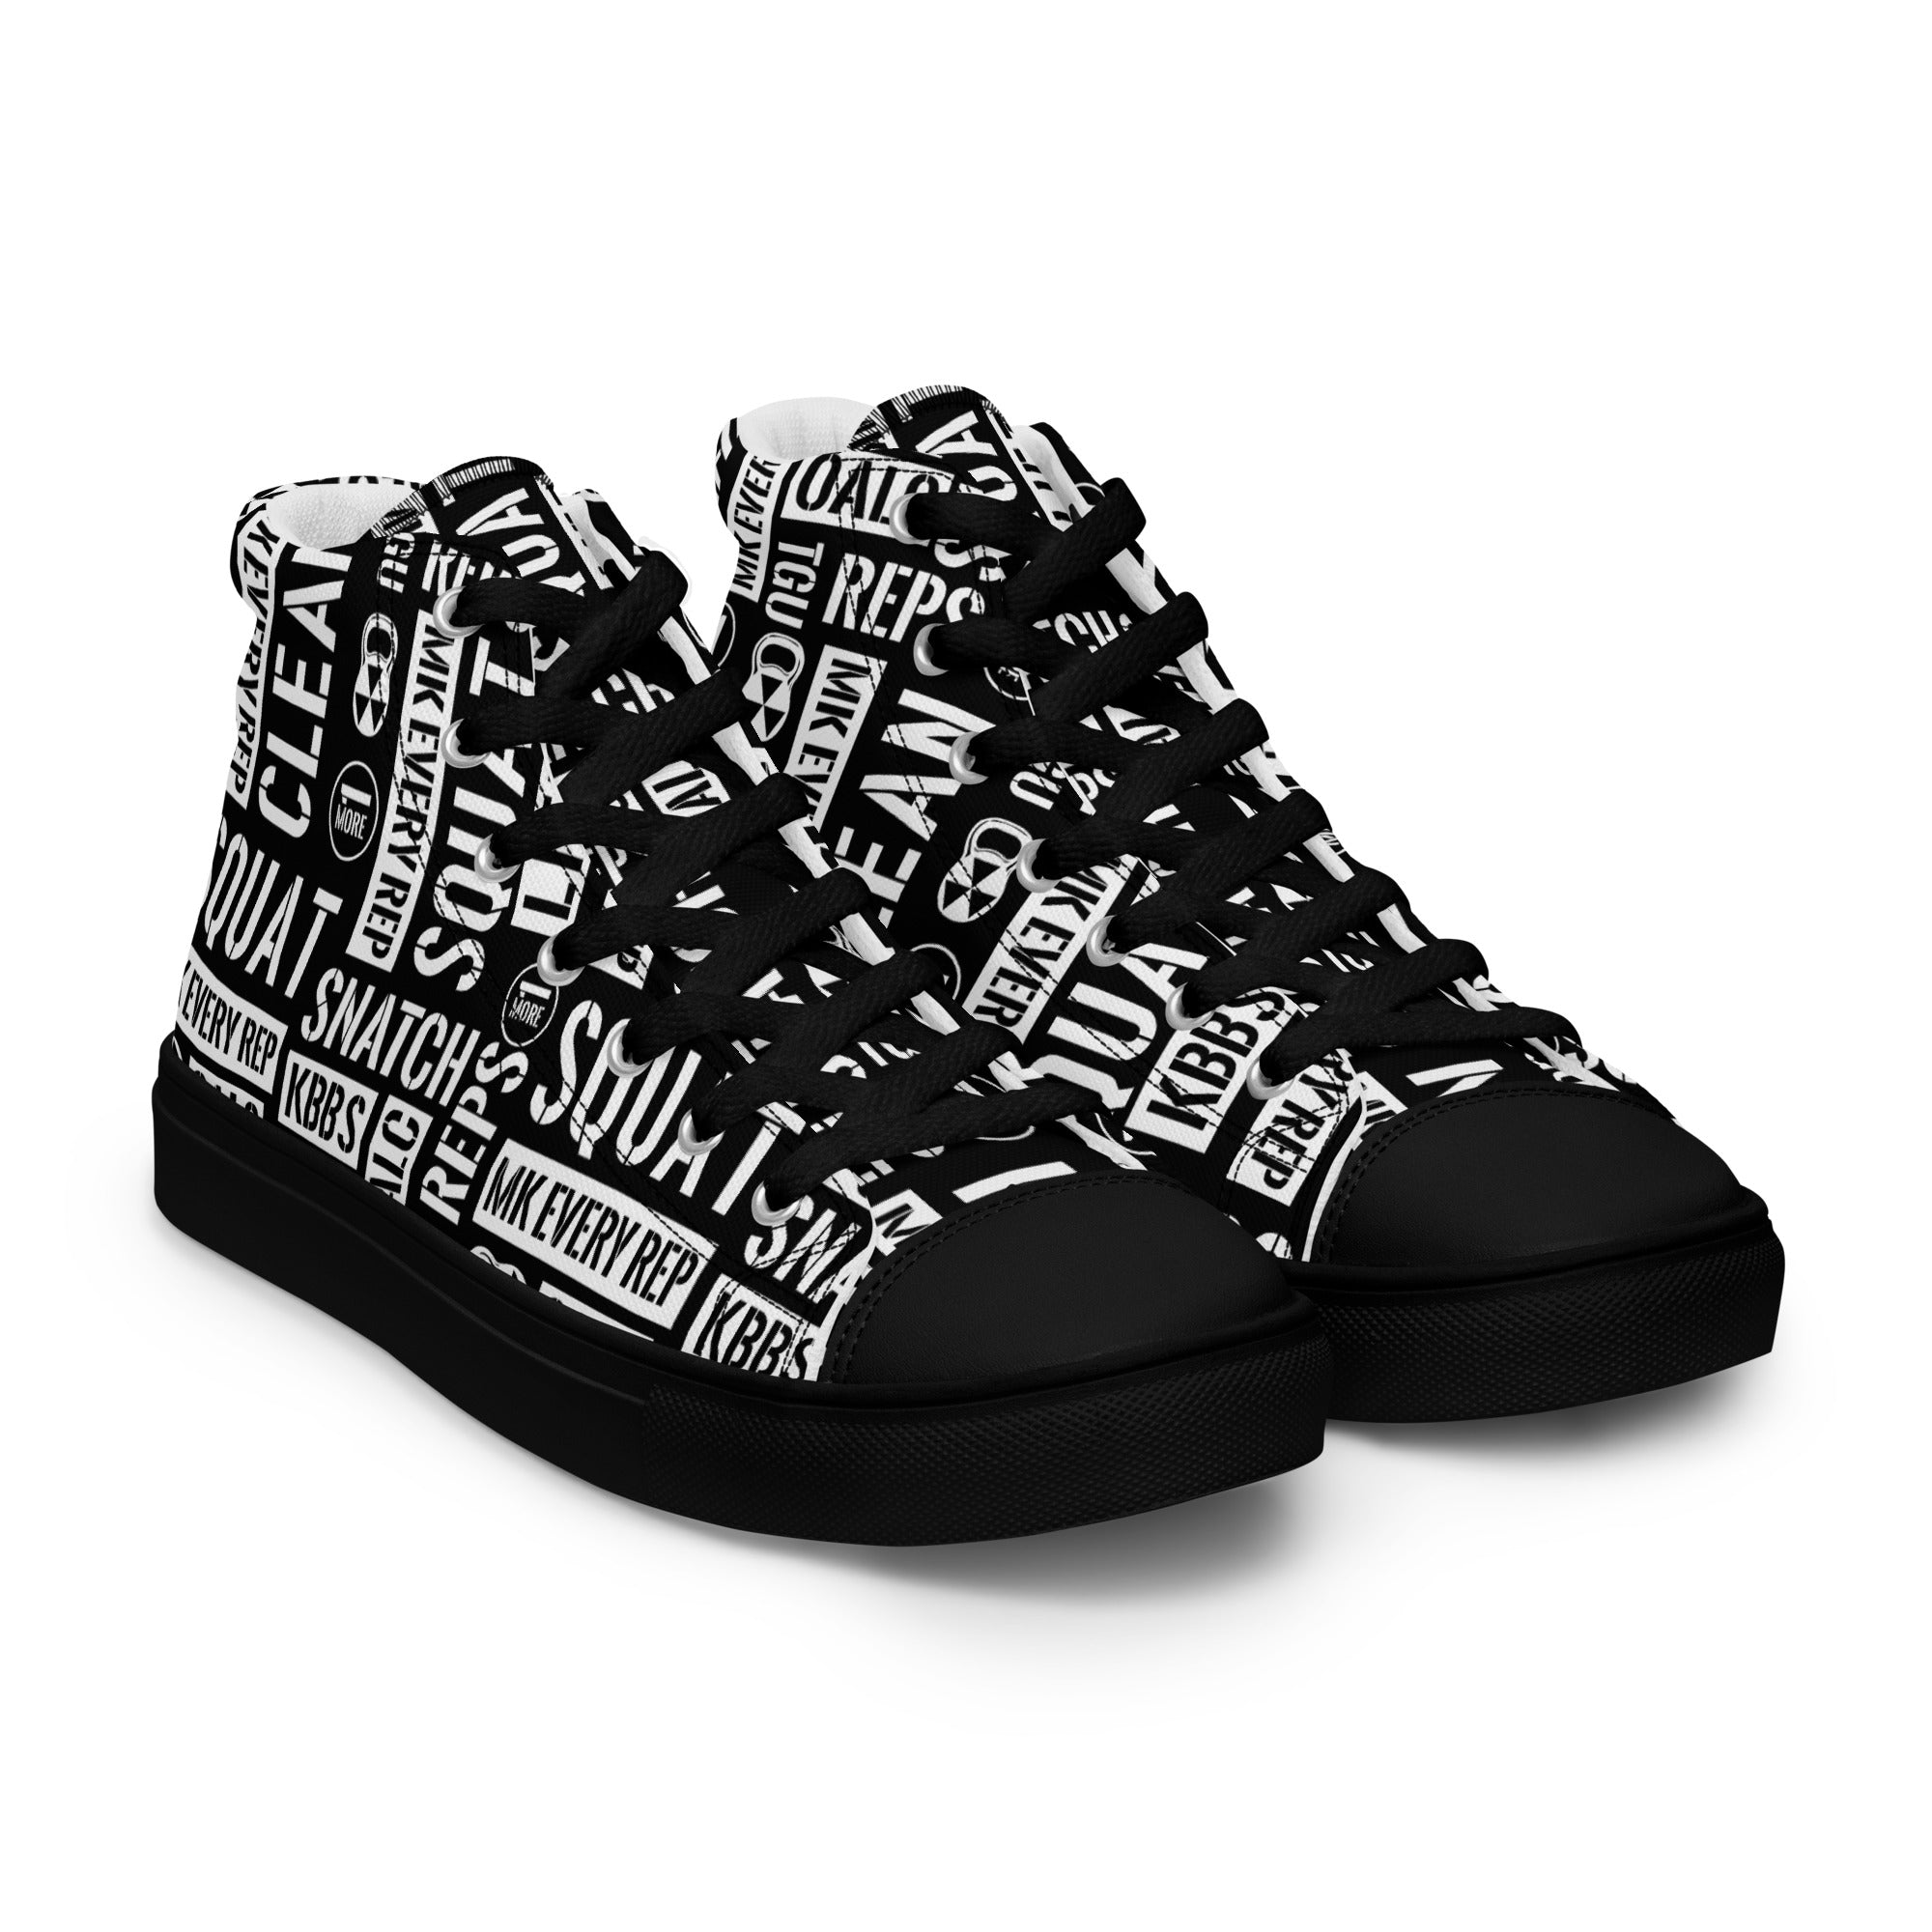 Men’s Black/White Acronyms Black high top canvas shoes